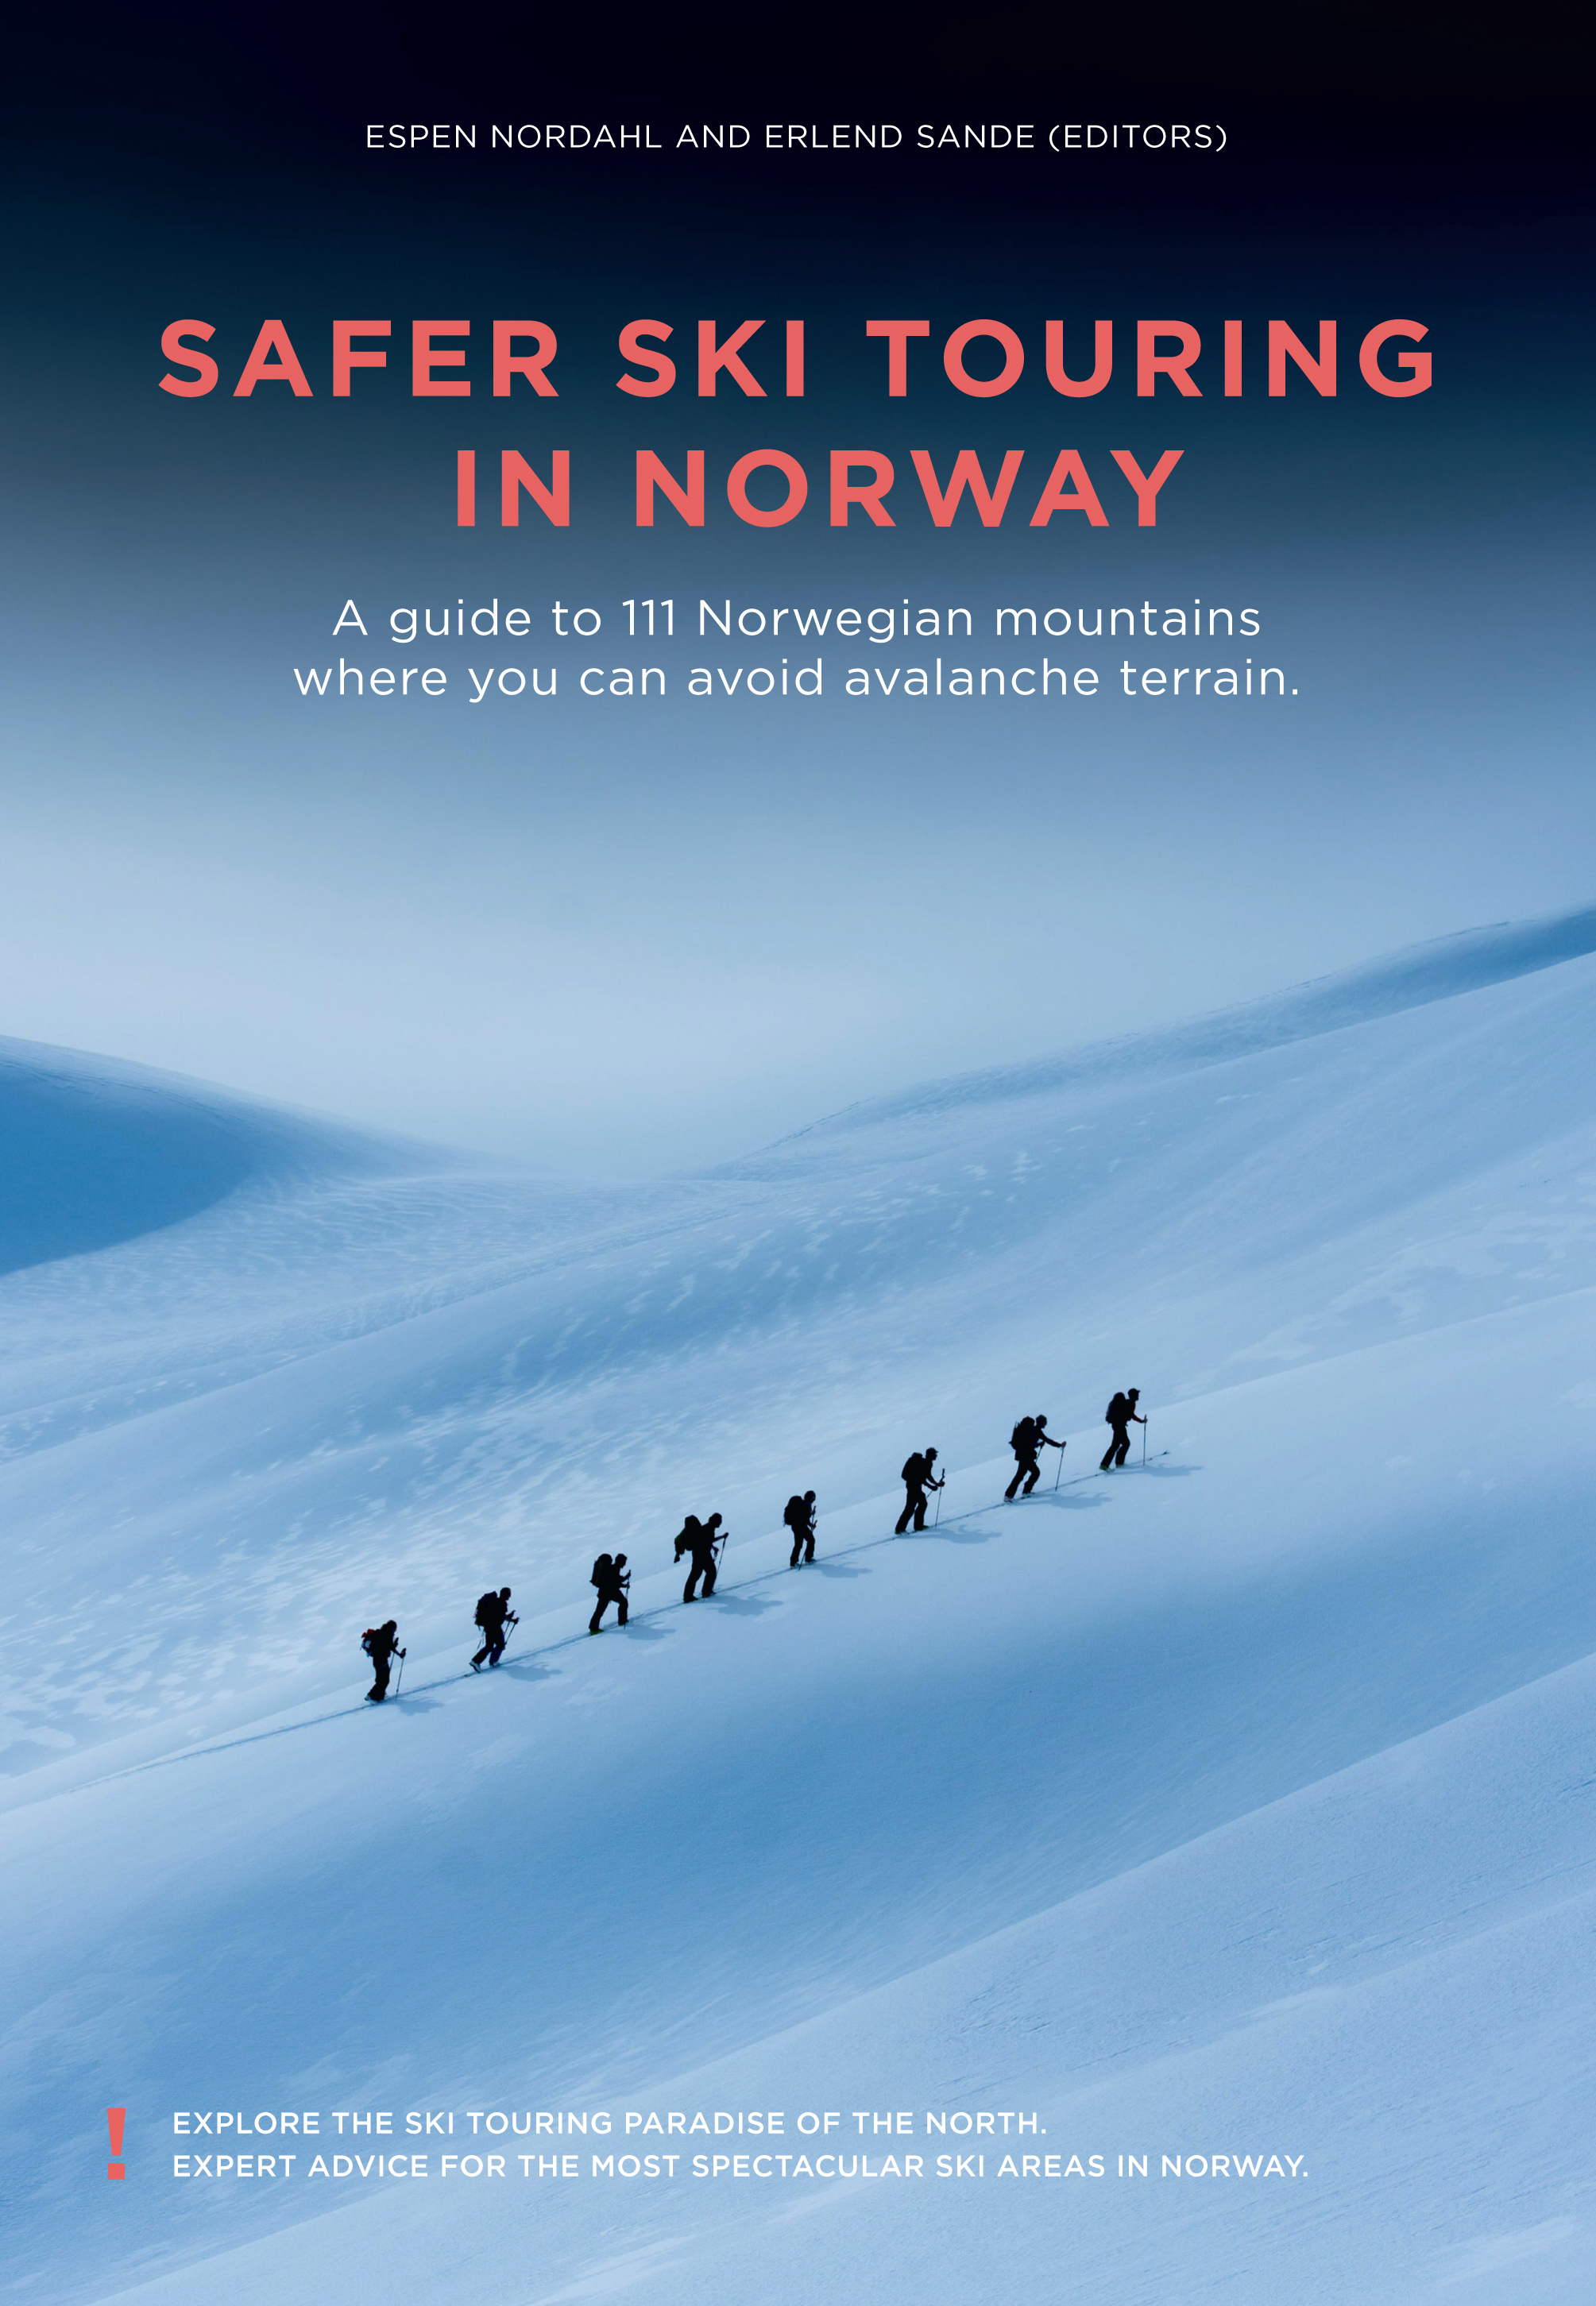 Safer Ski touring in Norway